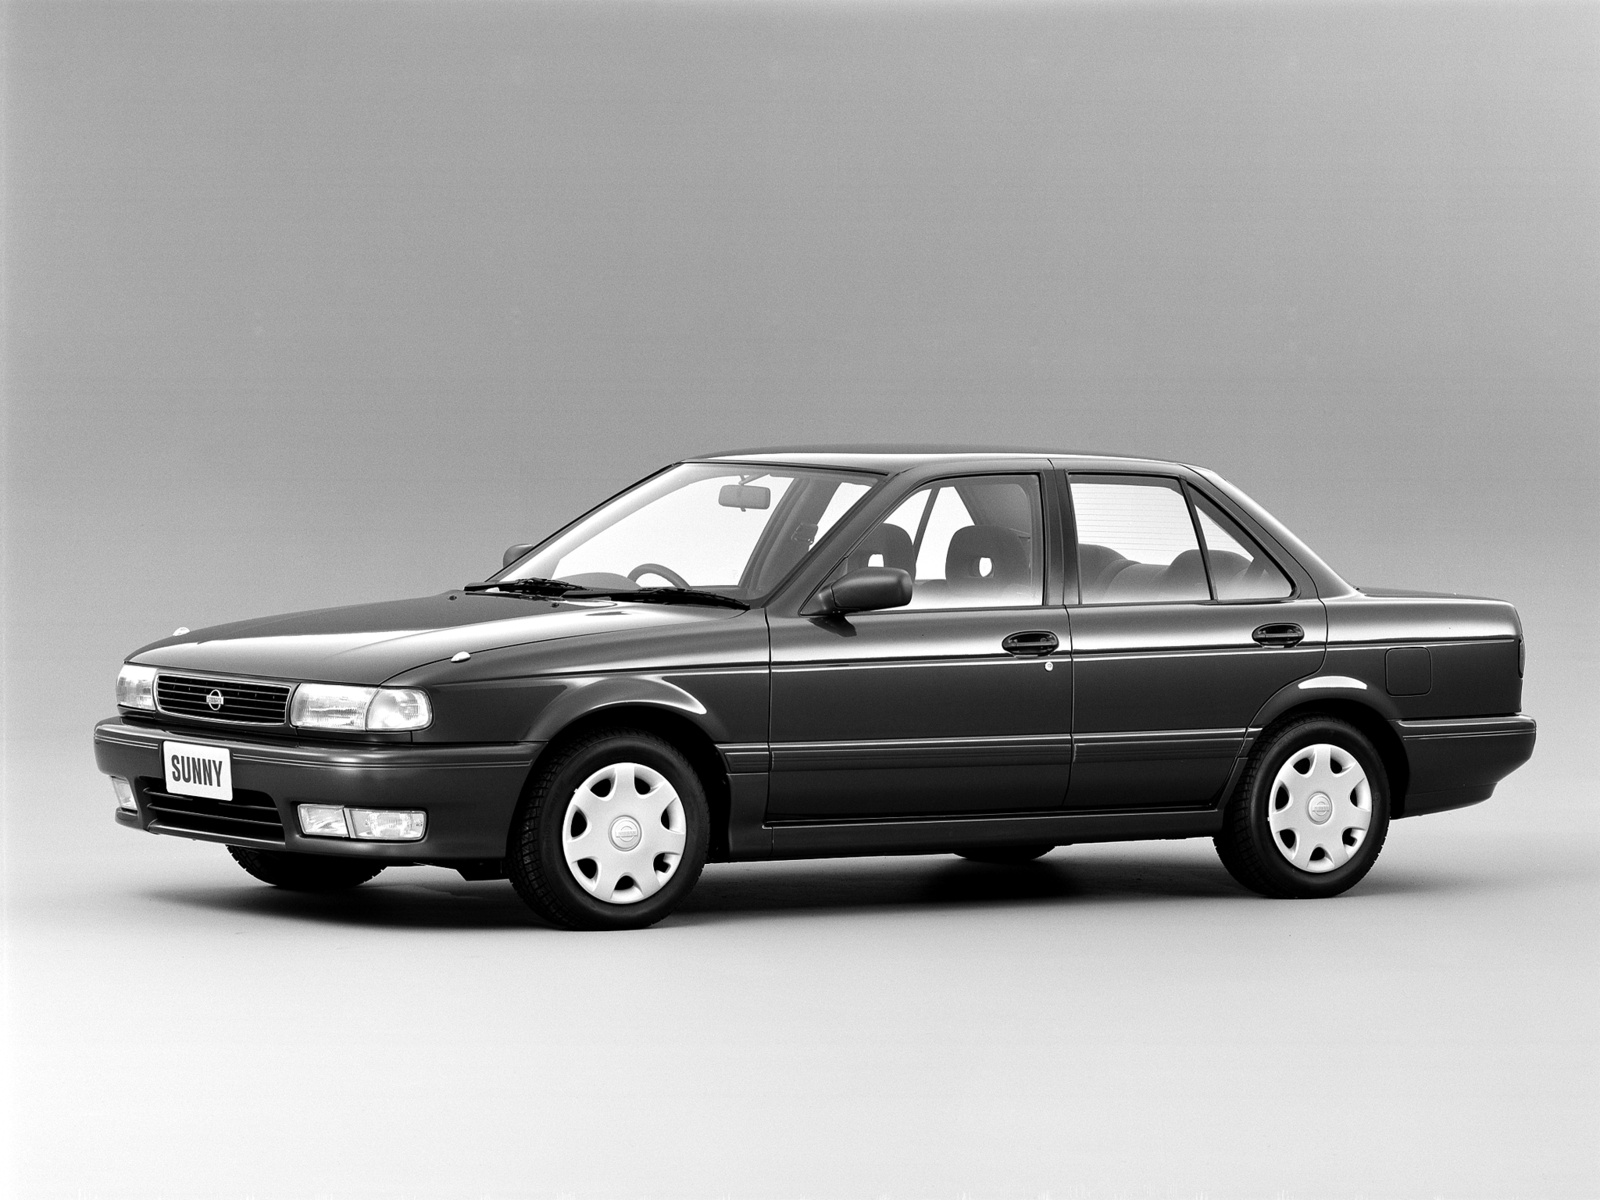 Renault 19 — описание модели фото